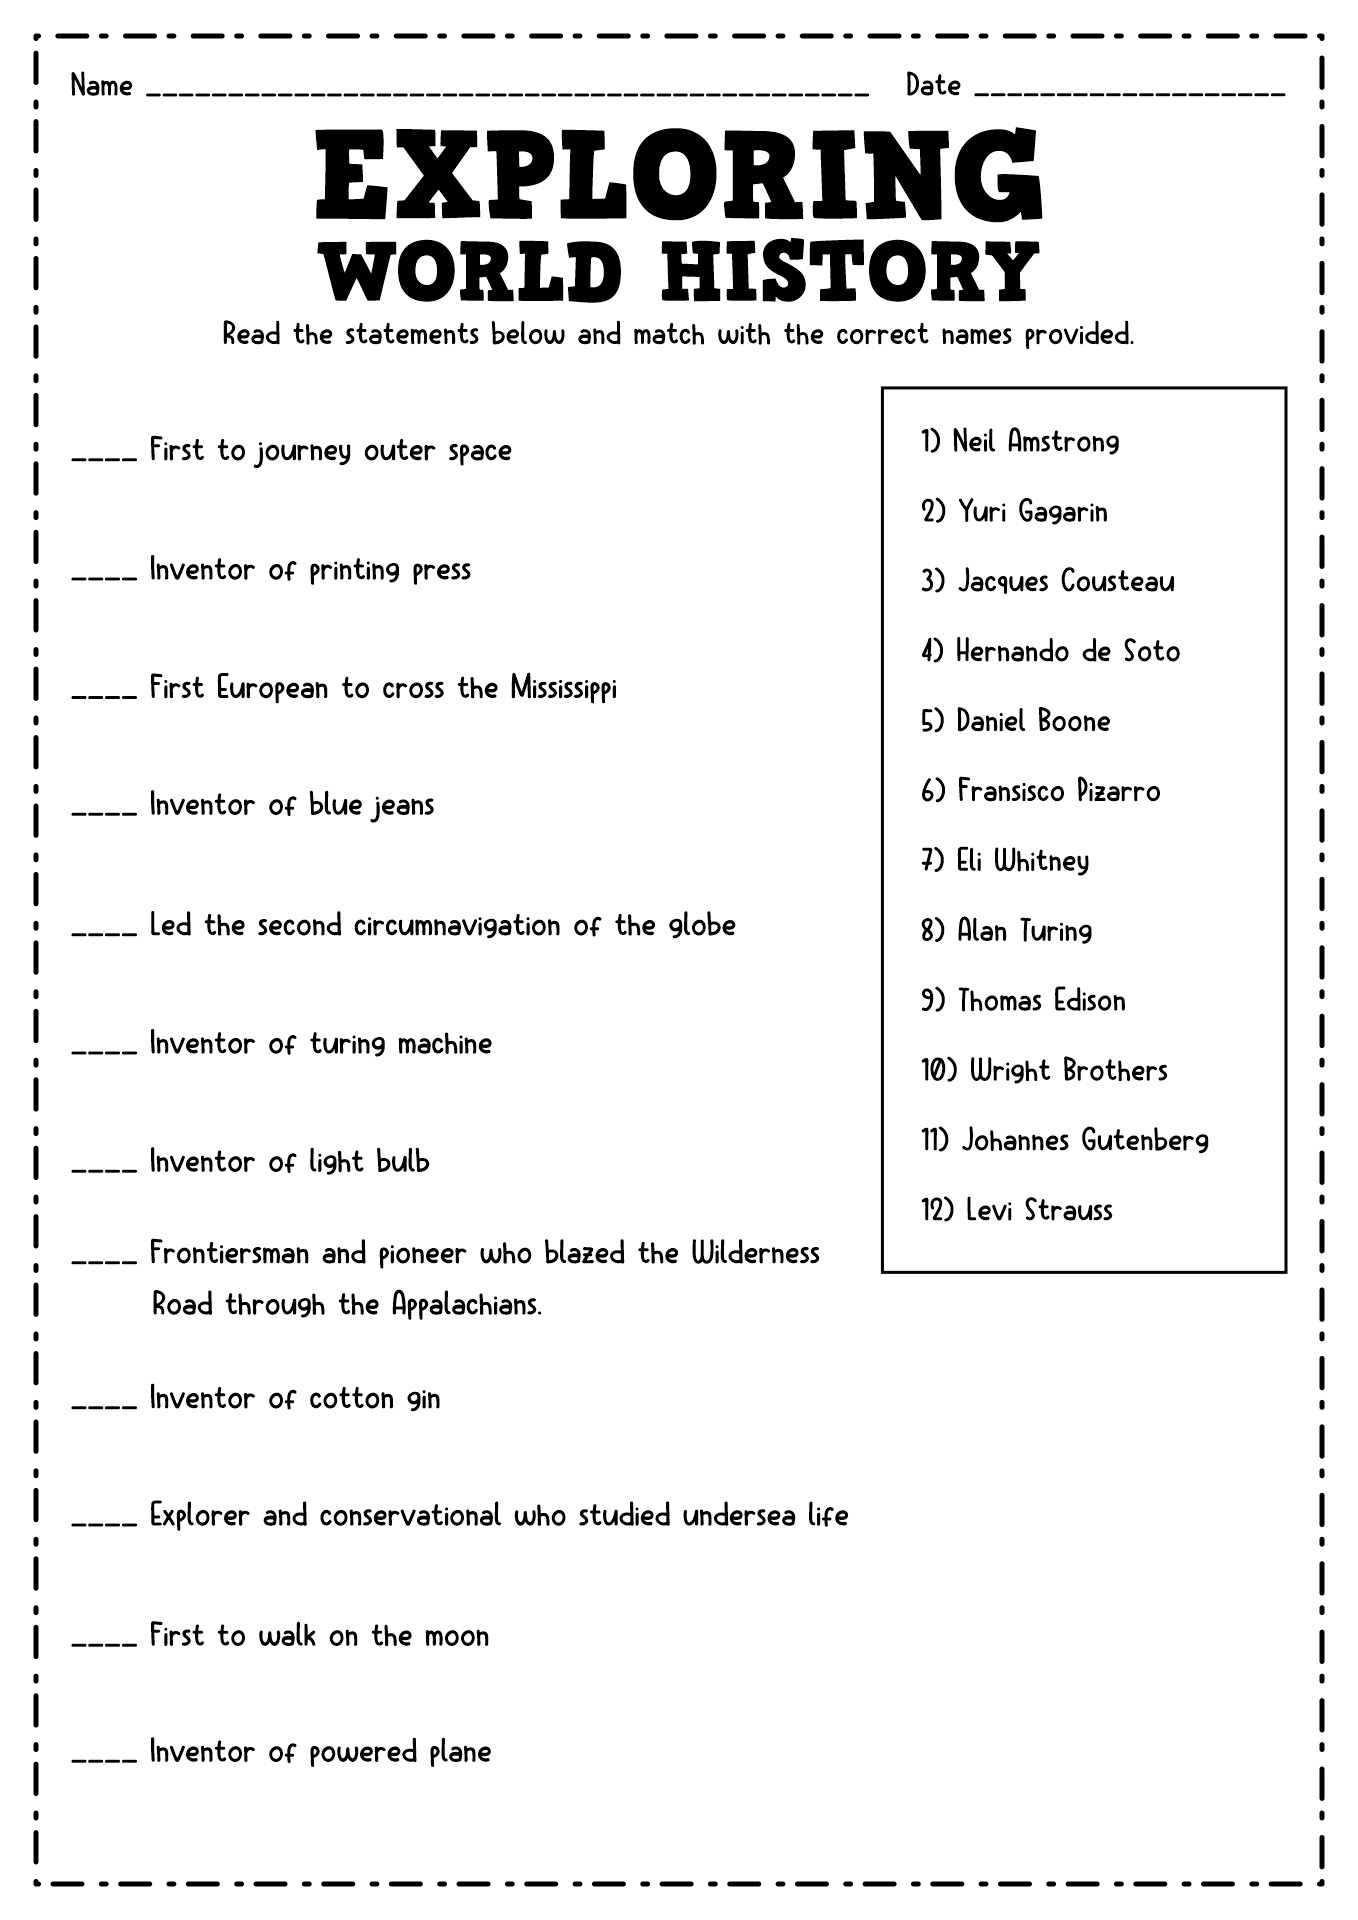 World History Worksheets Free Image